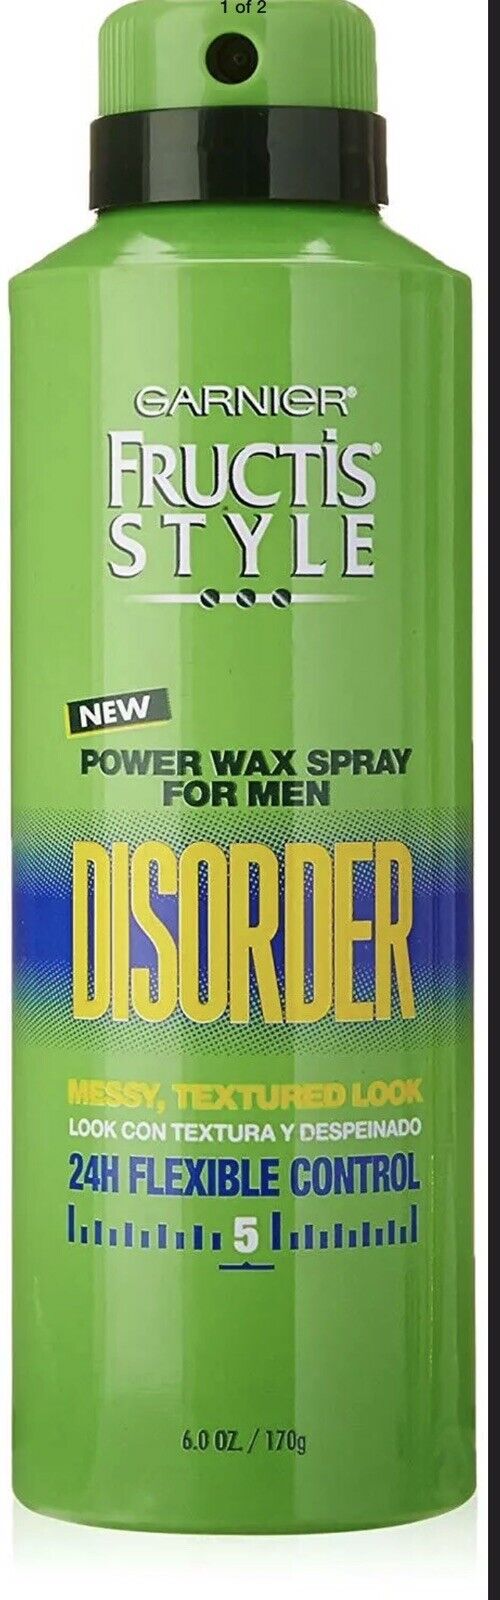 GARNIER Fructis Style DISORDER Power Wax Spray For Men 603084411269 | eBay